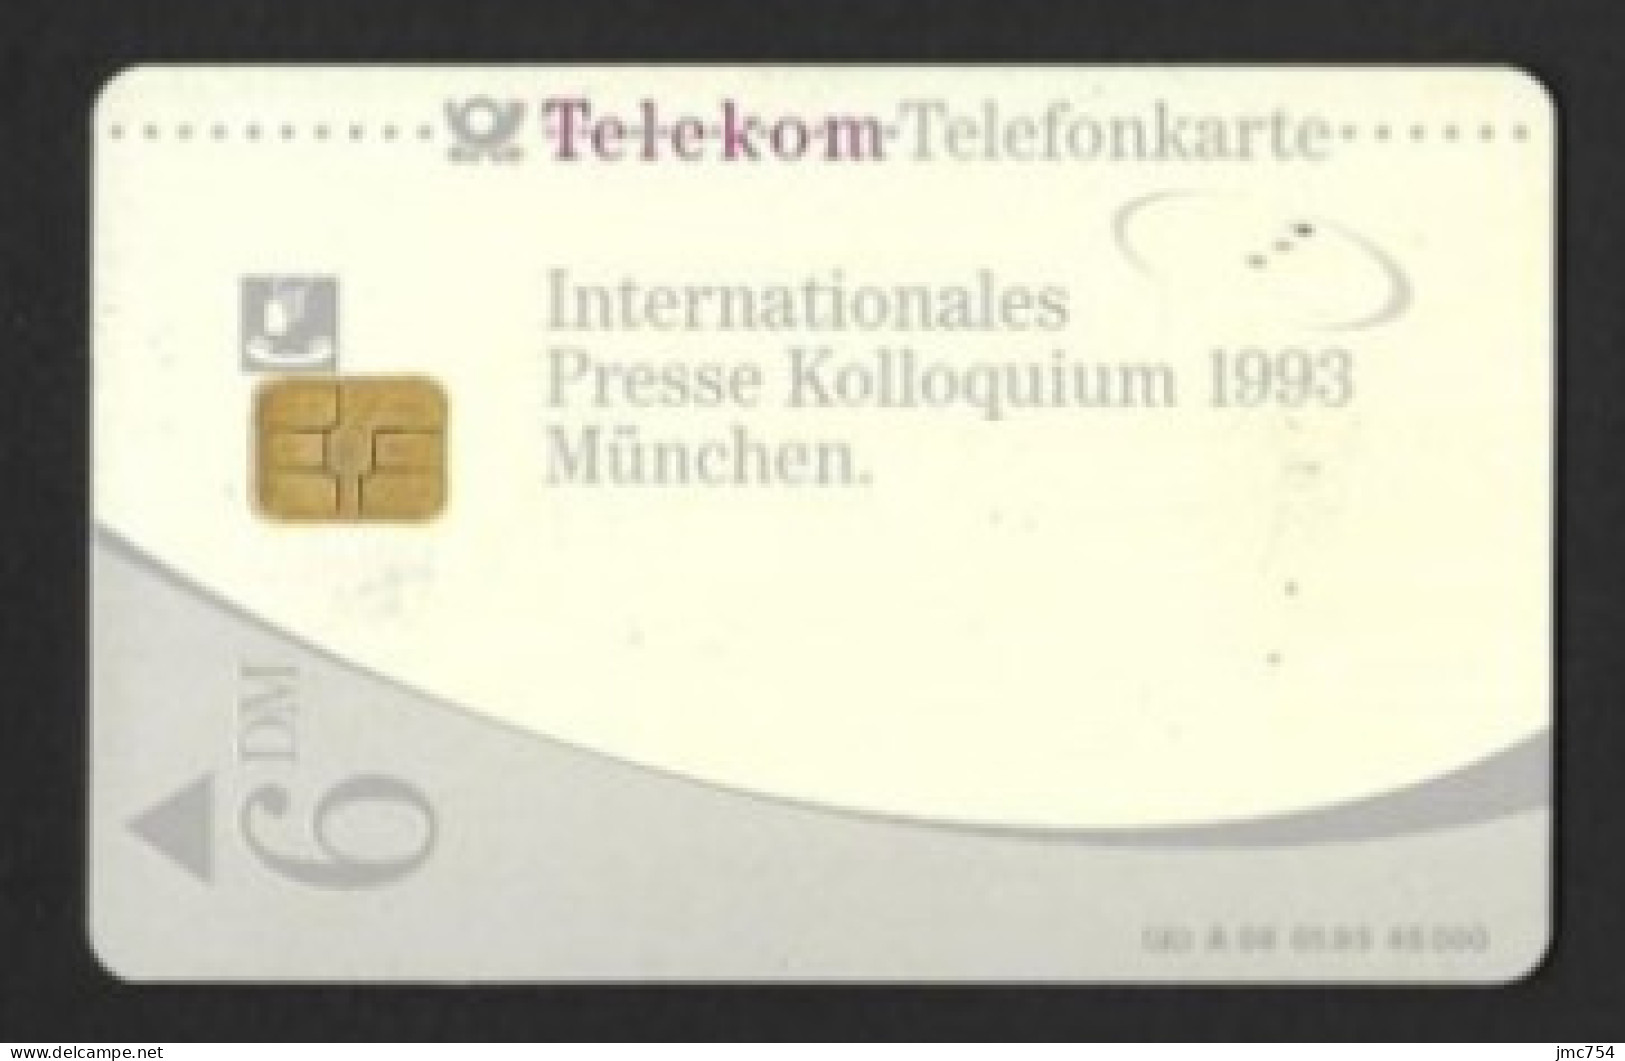 Télécarte Allemande.  Internationales Presse Kolloquium 1993 München.   Telefonkarte. - Collections